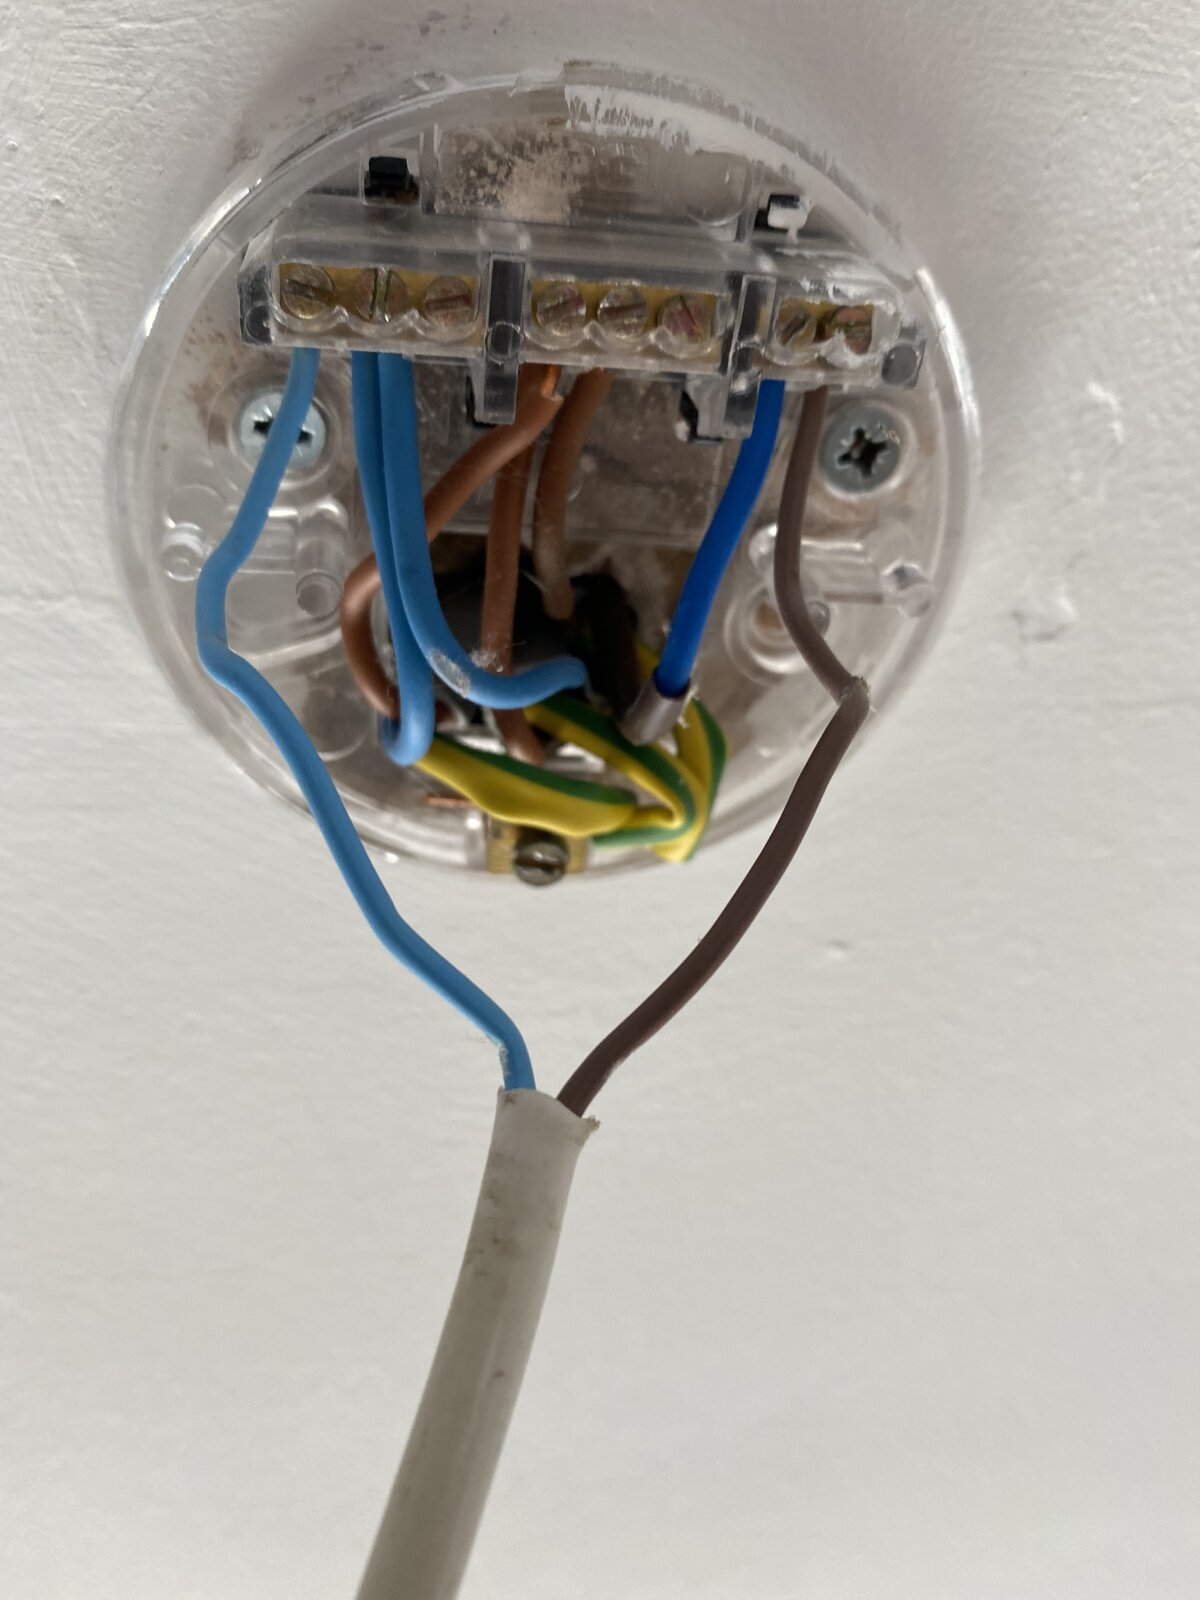 Ceiling rose wiring | DIYnot Forums